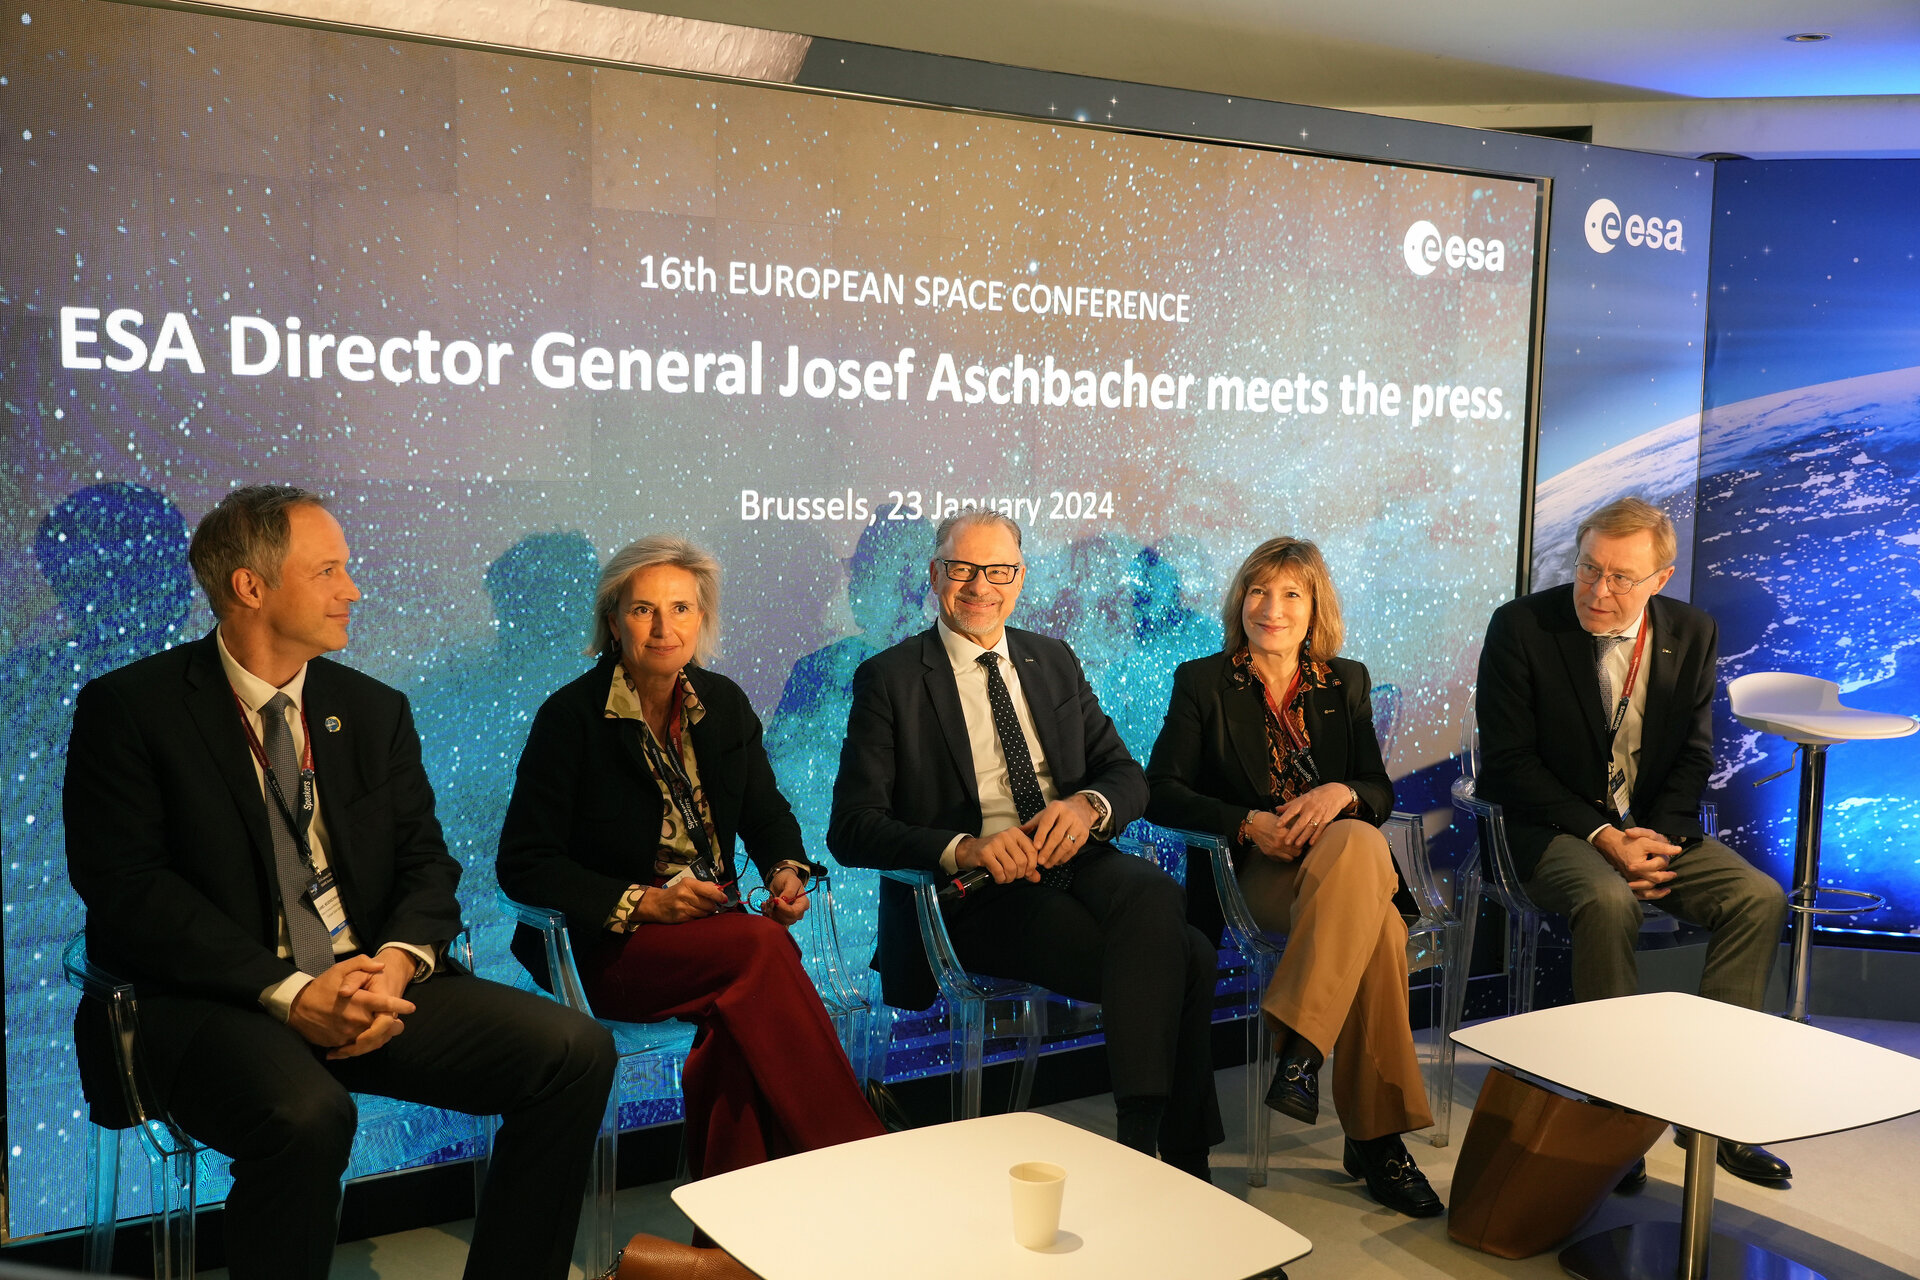 Josef Aschbacher, Daniel Neuenschwander, Simonetta Cheli, Géraldine Naja and Toni Tolker-Nielsen meet the press at the 16th European Space Conference